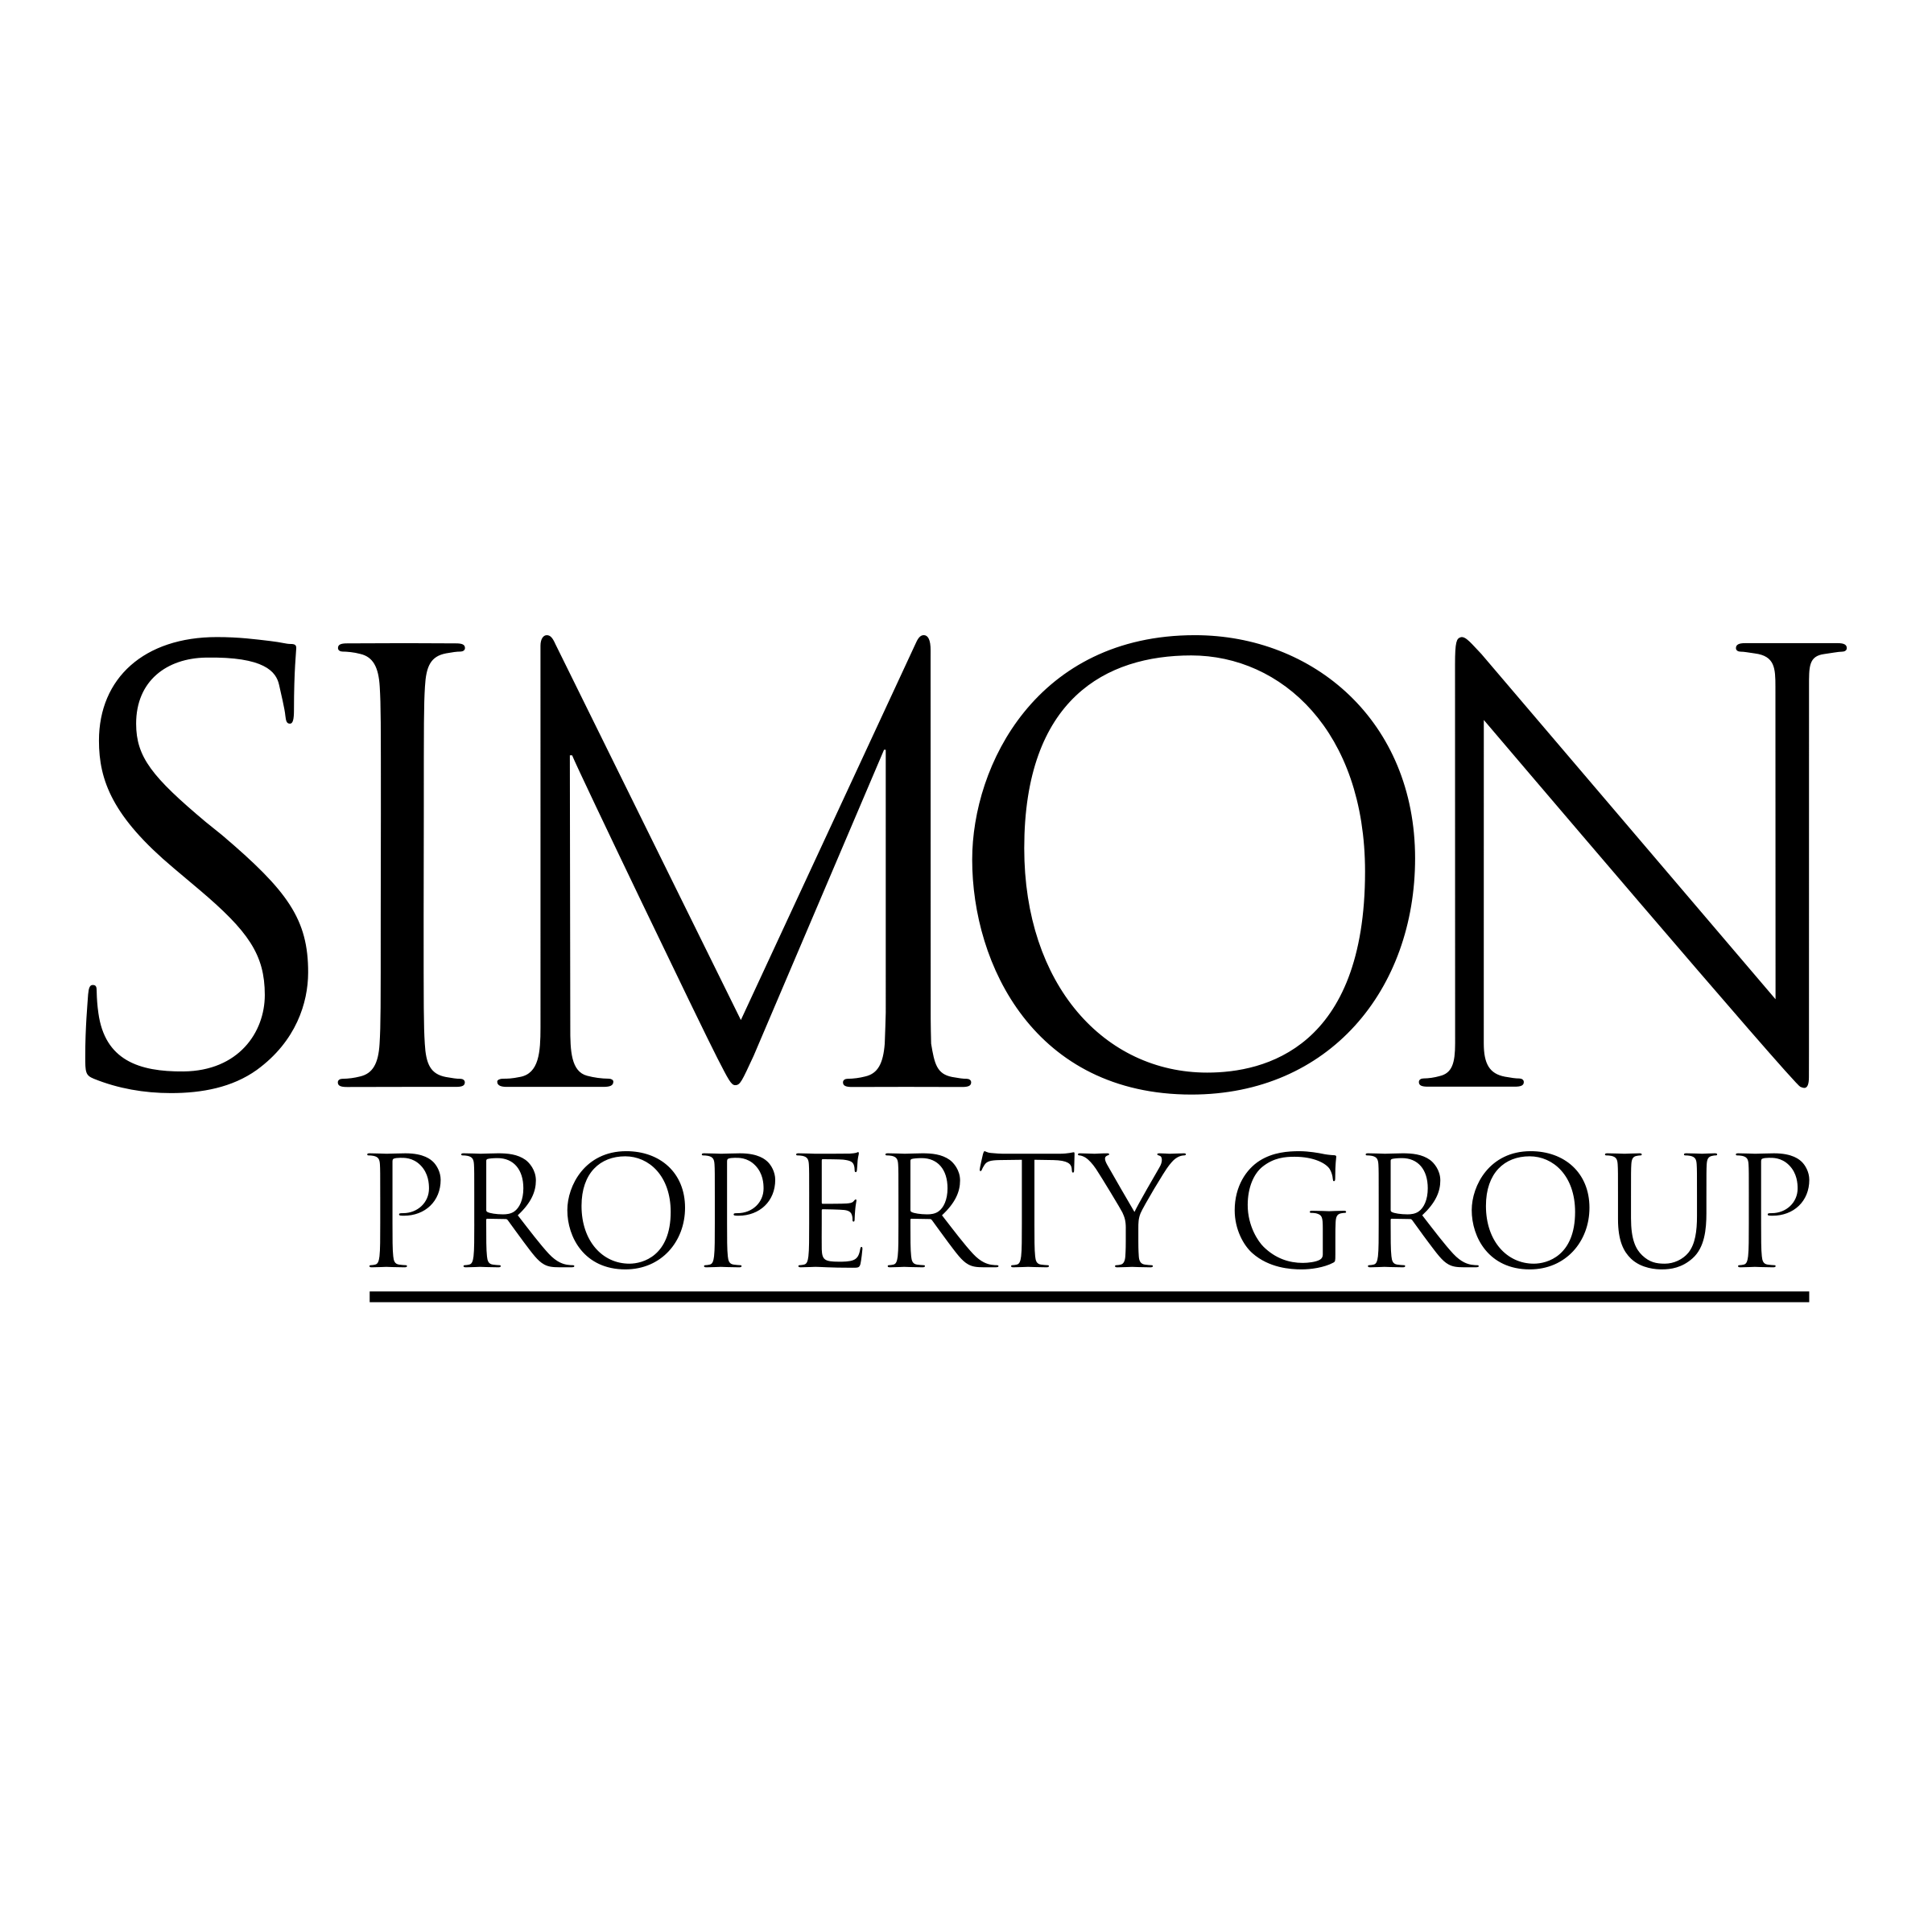 Simon Logo - Simon Property Group Logo PNG Transparent & SVG Vector